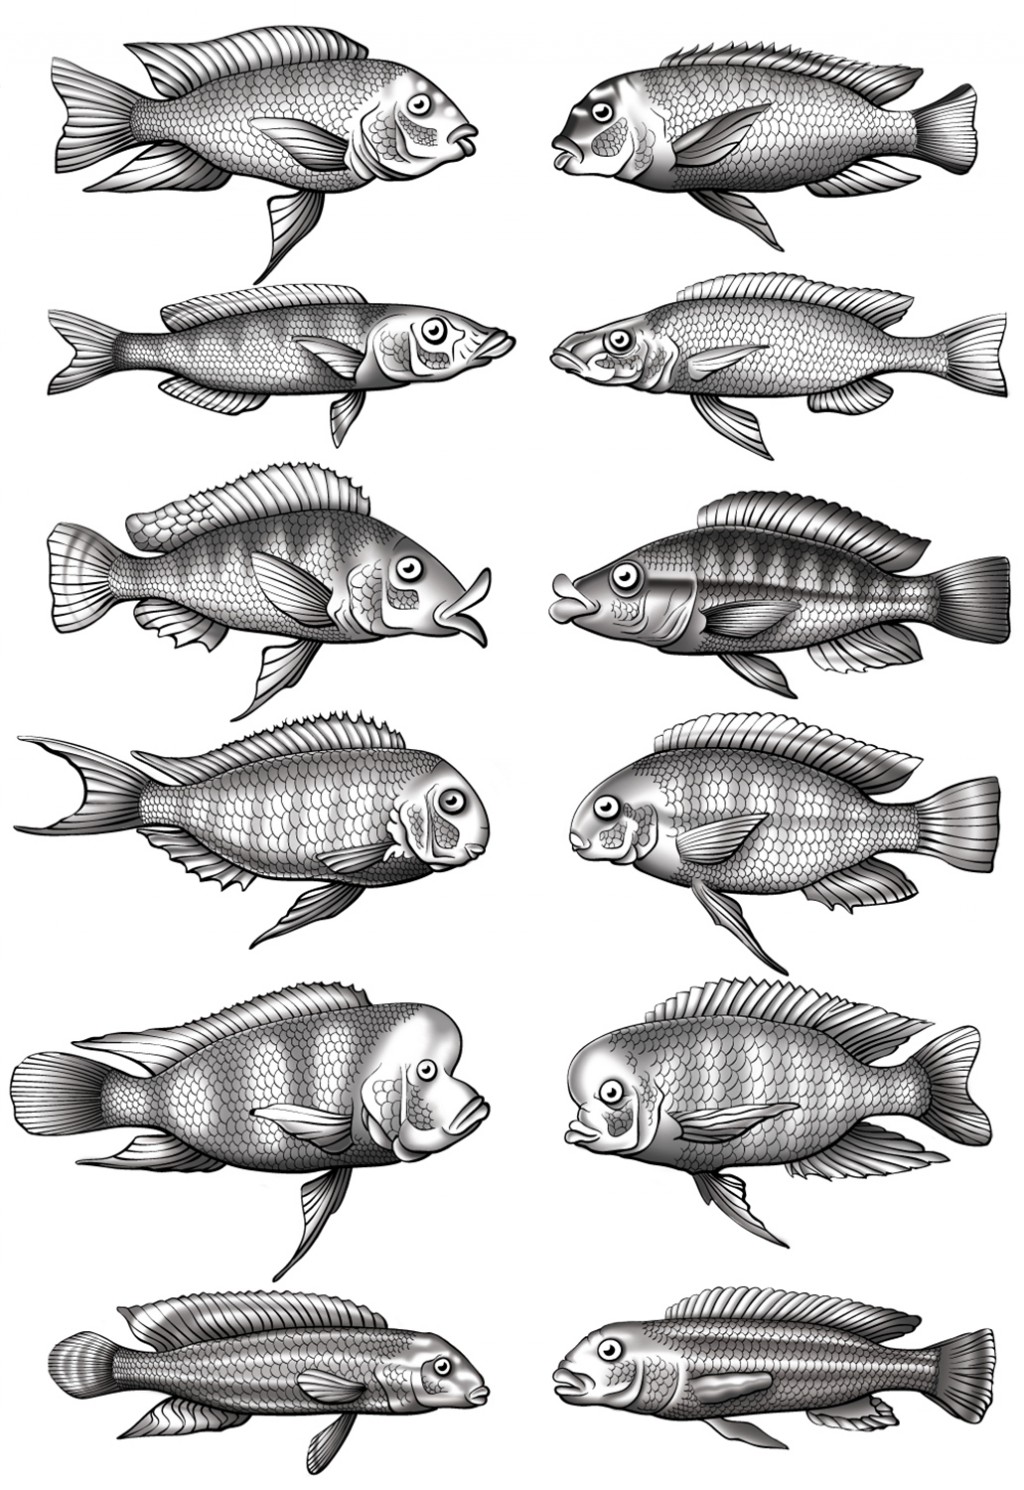 Evolutionary Radiations. Adobe Photoshop & Illustrator. May 2011.